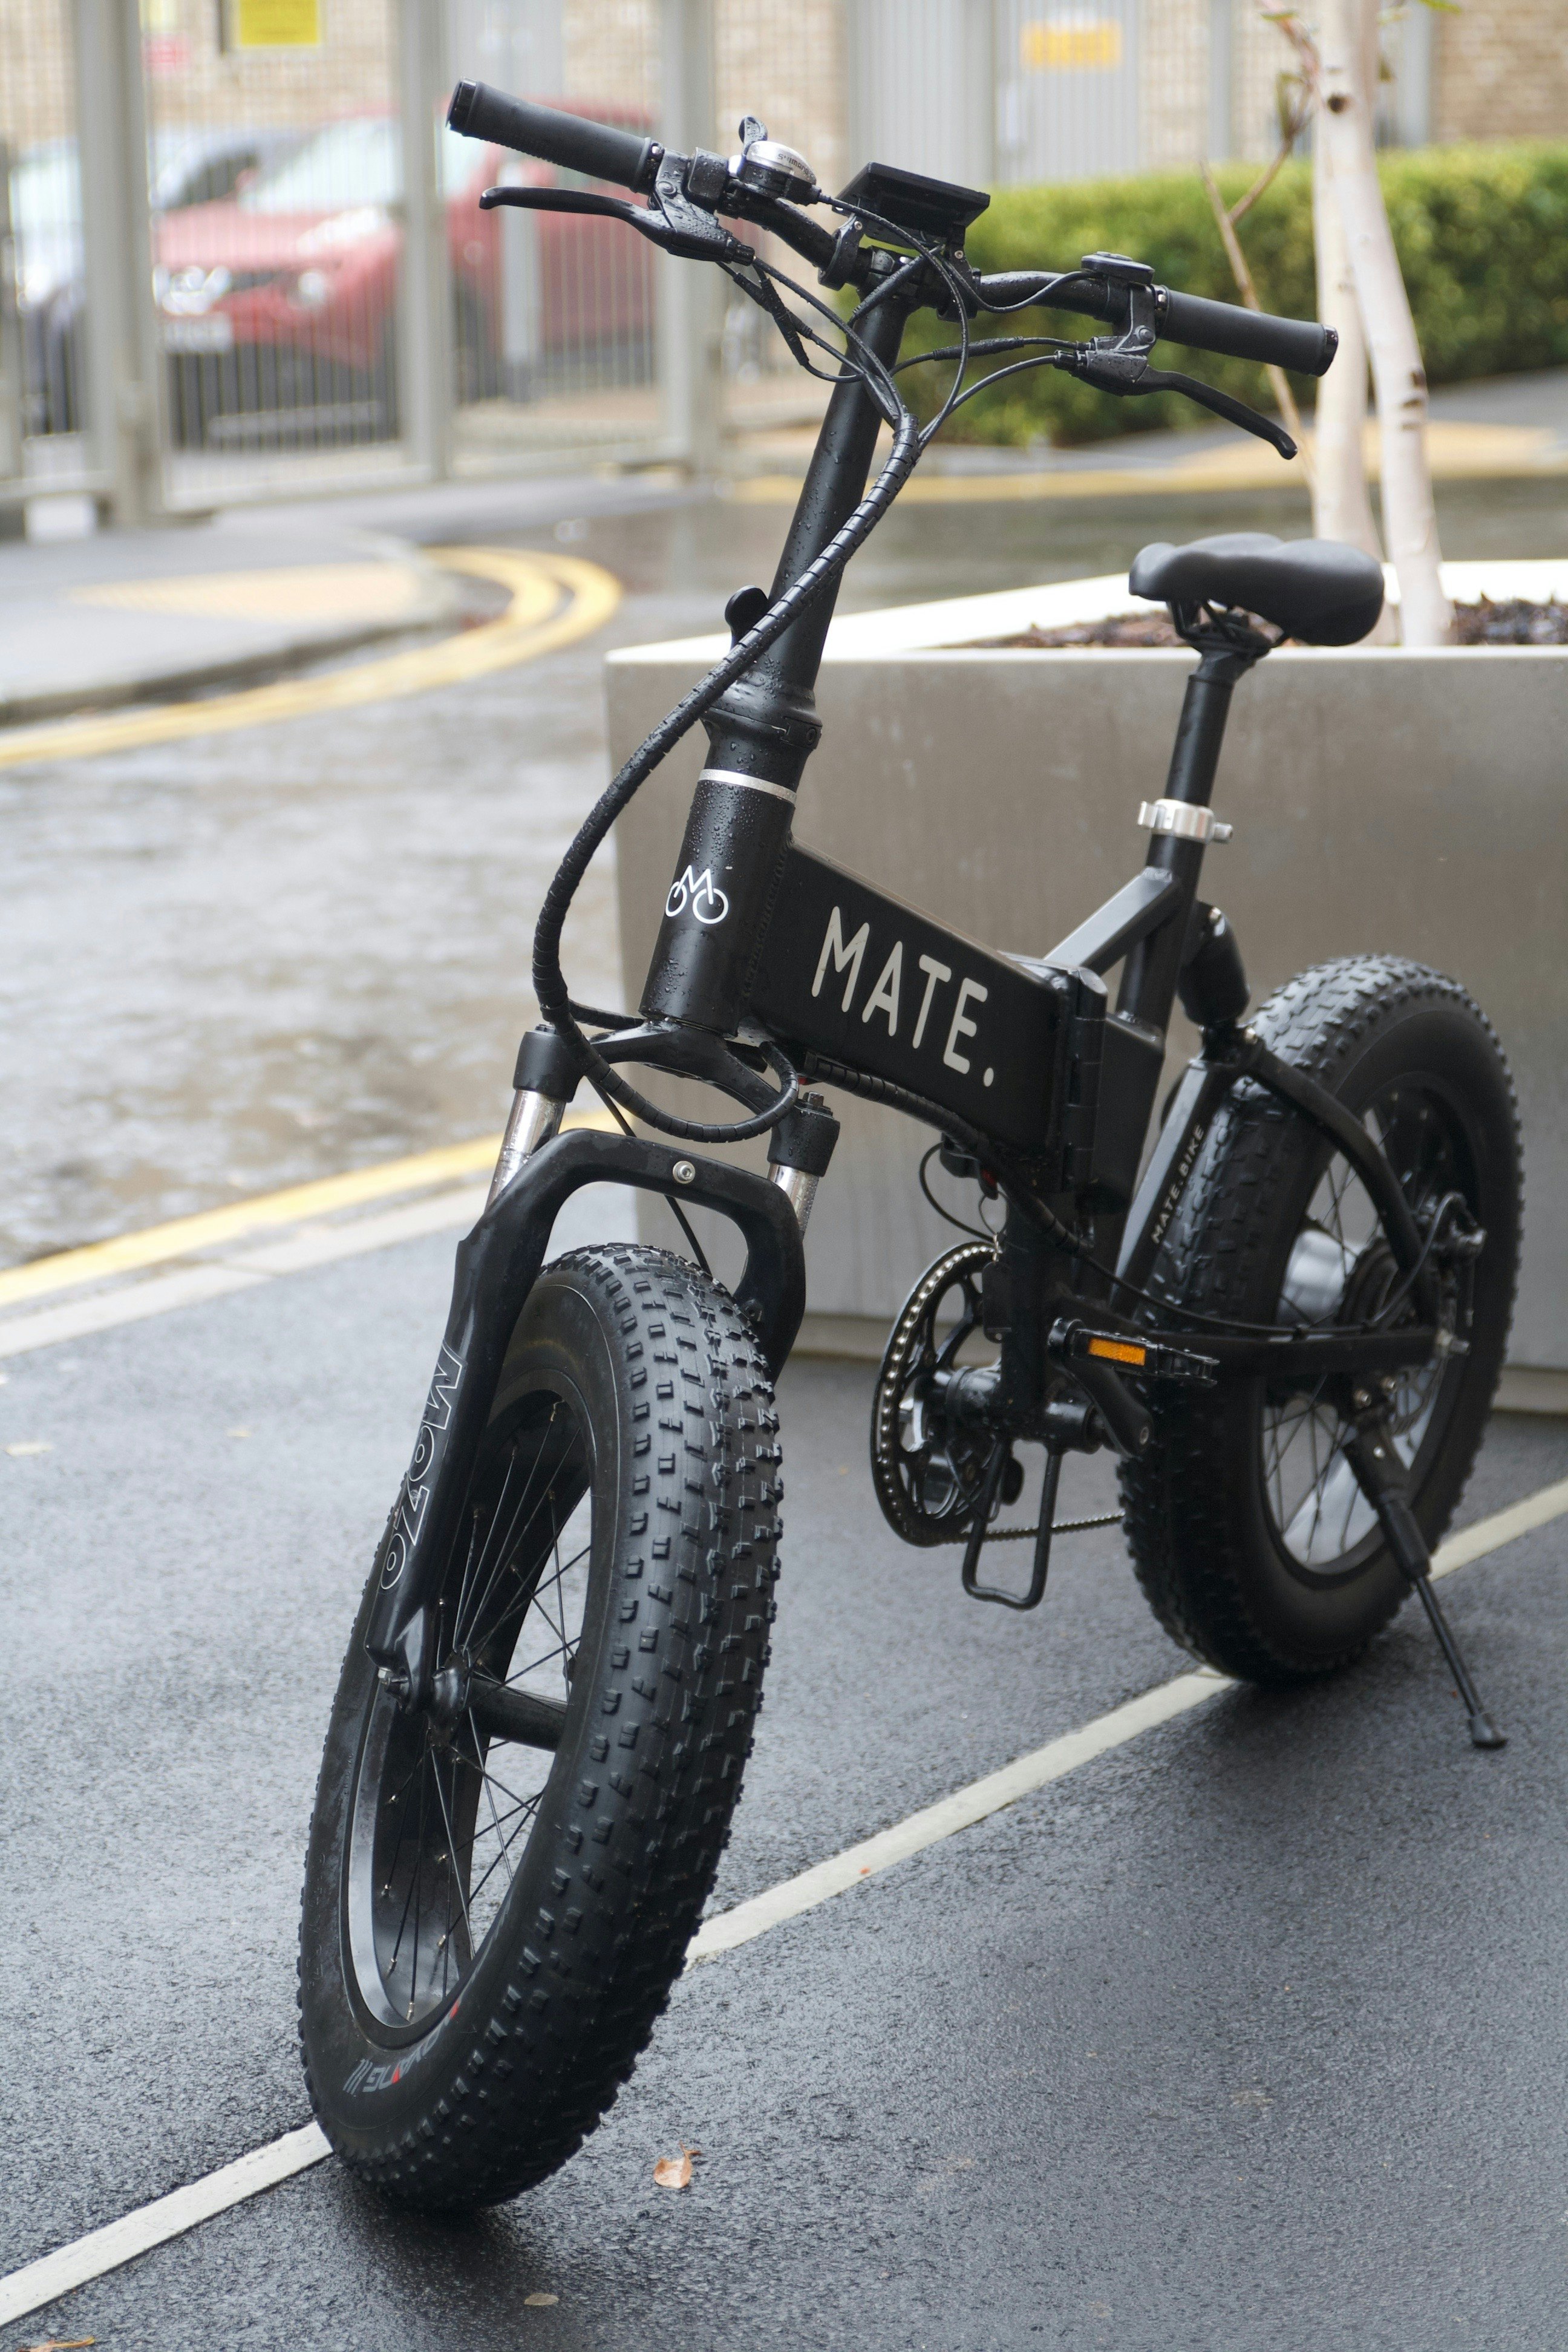 mate x bike motor